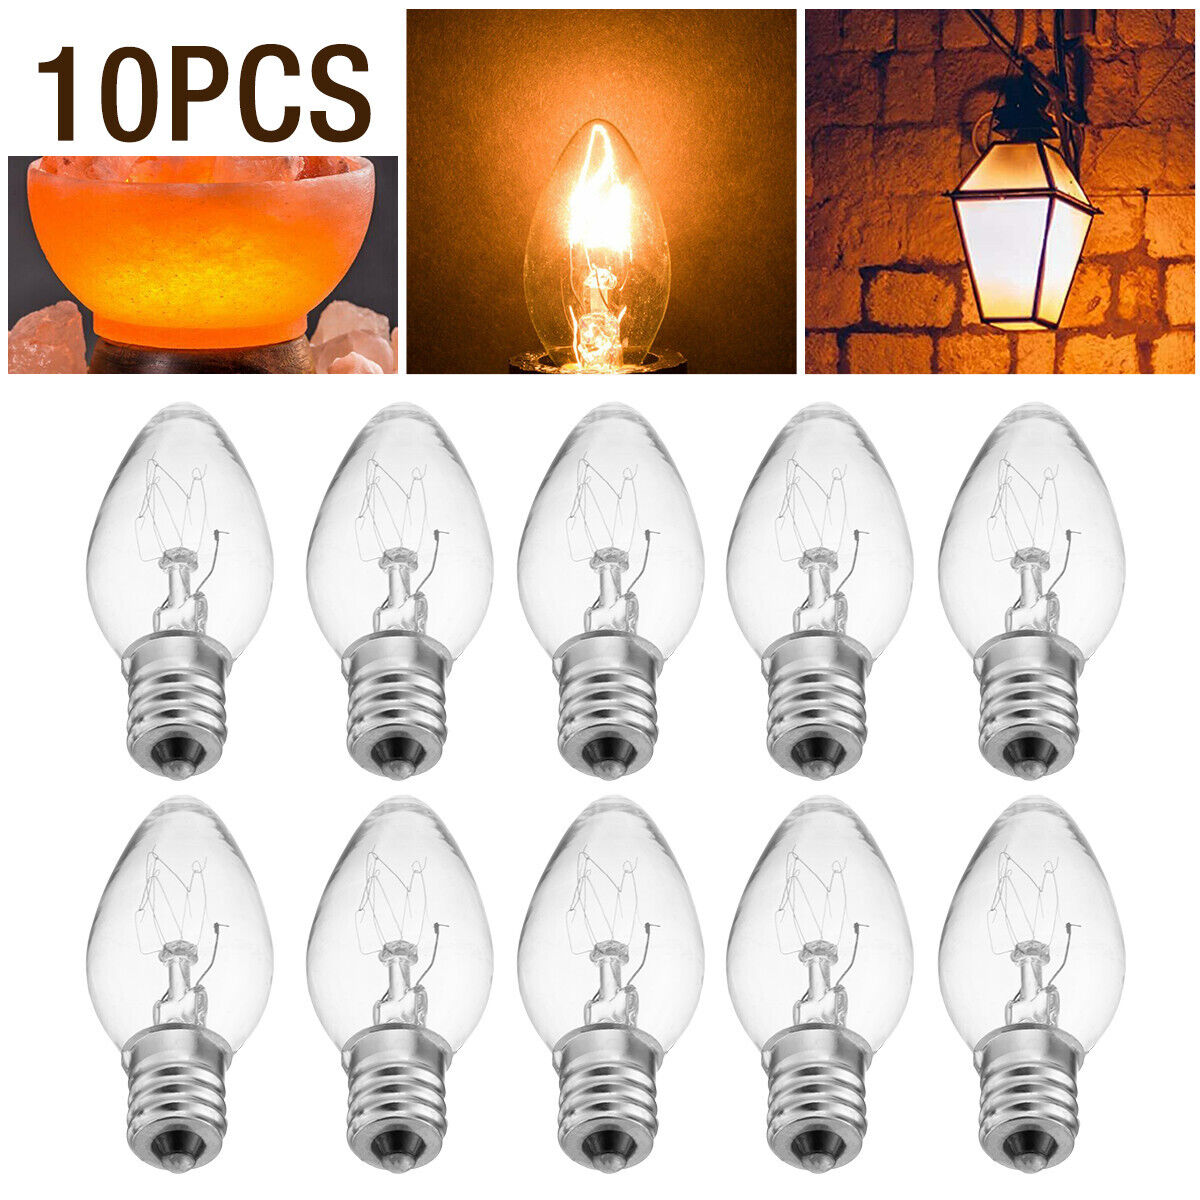 10 Pack 15 Watt Scentsy Plug-in Wax Warmer Night Light Diffuser C7 Bulbs Lamps Housmile